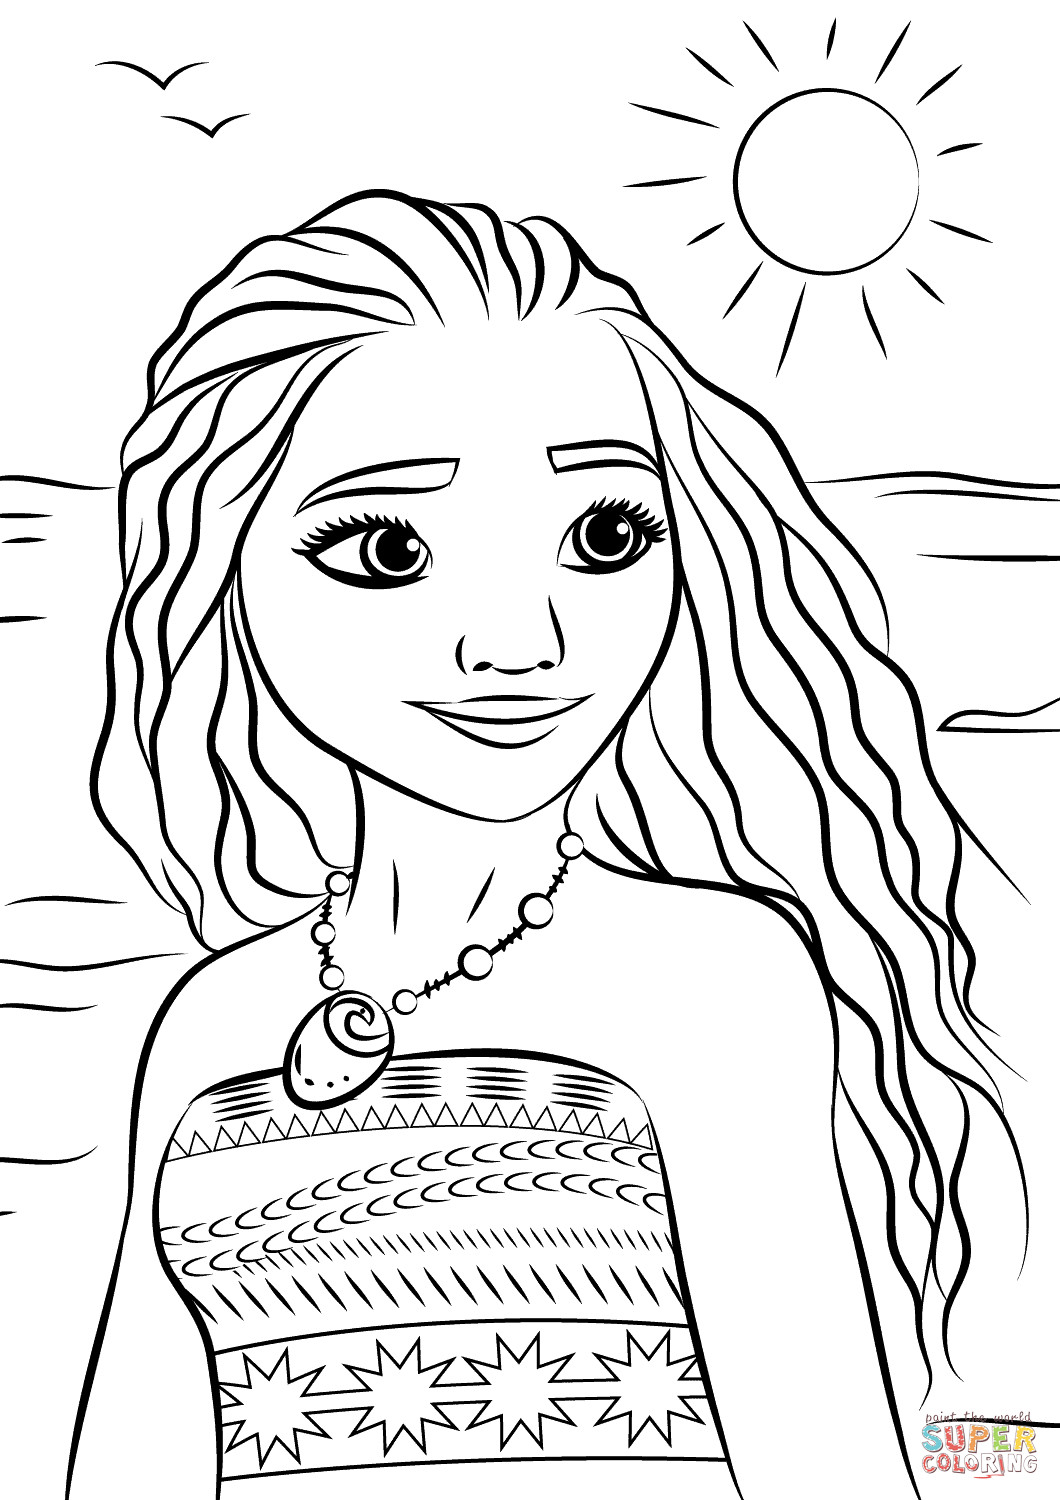 Moana Coloring Pages Printable
 Princess Moana Portrait coloring page